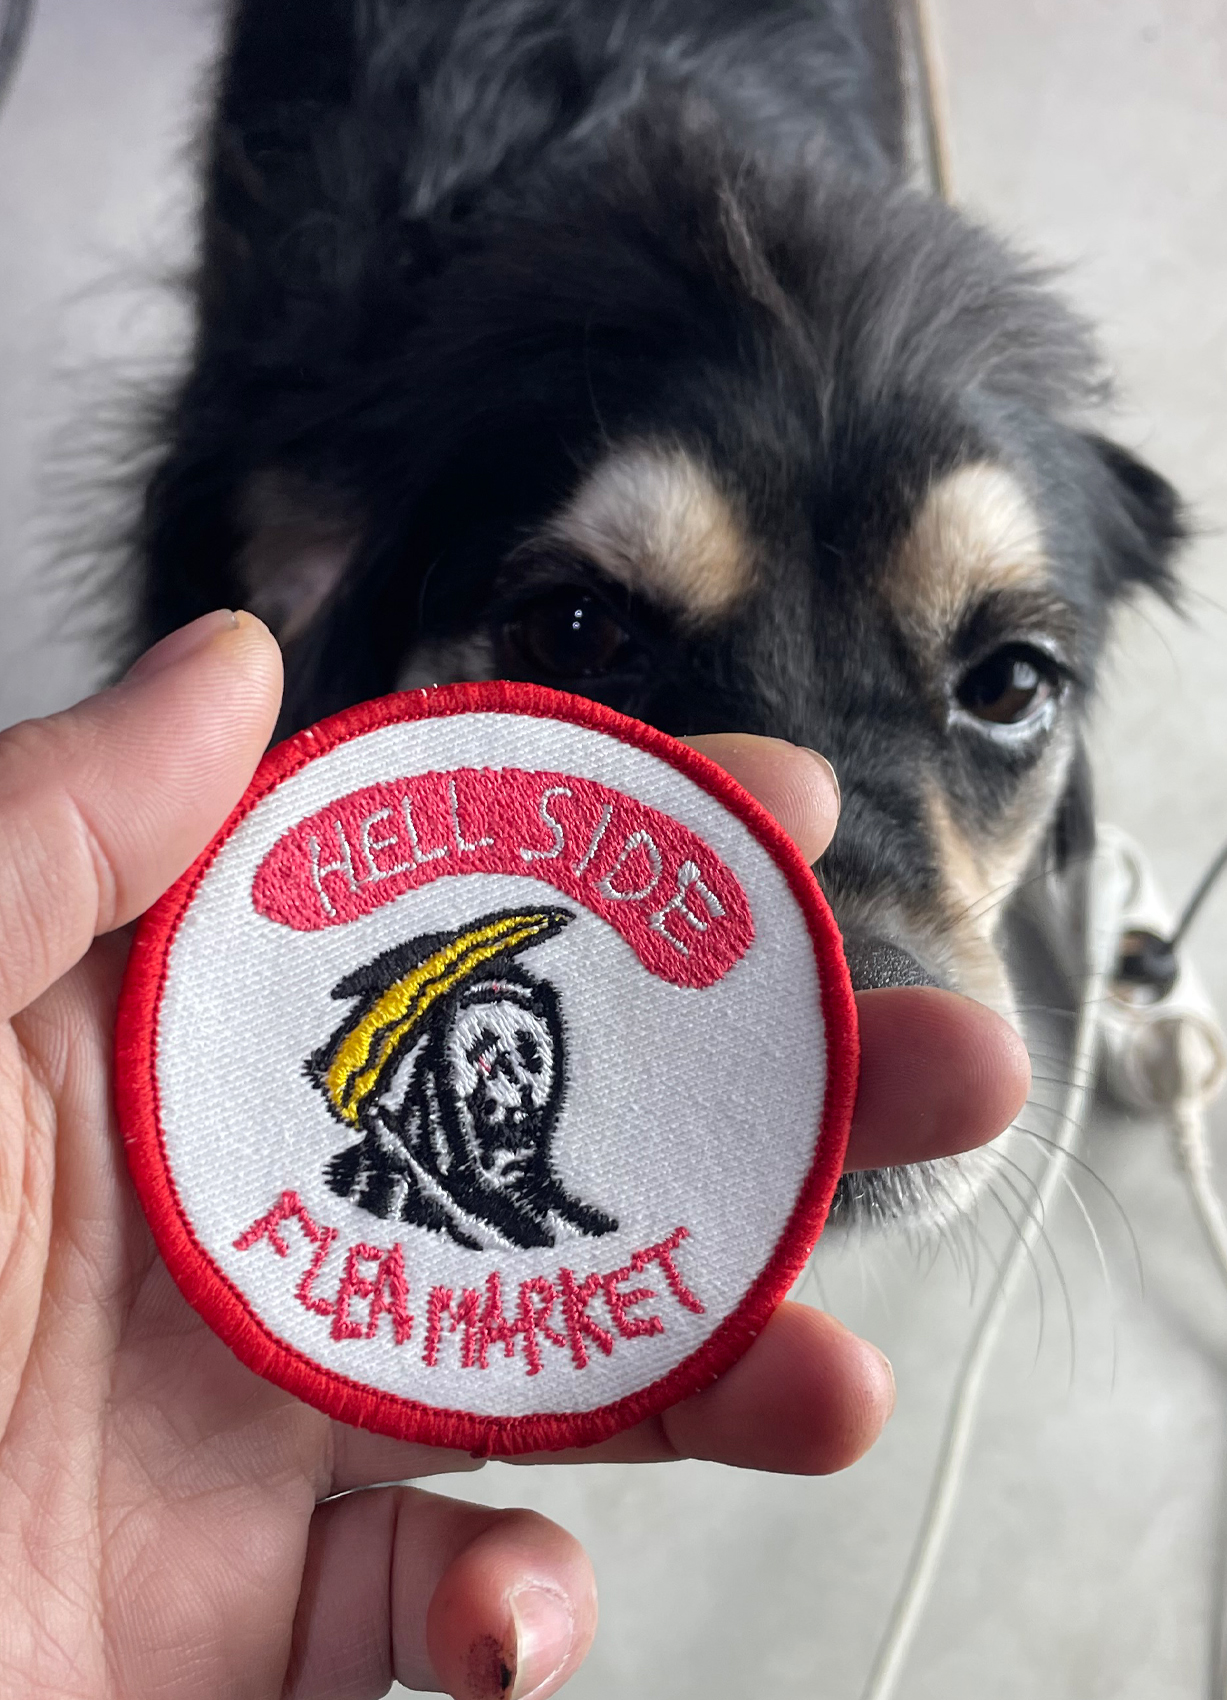 hell side flea market embroidery patch